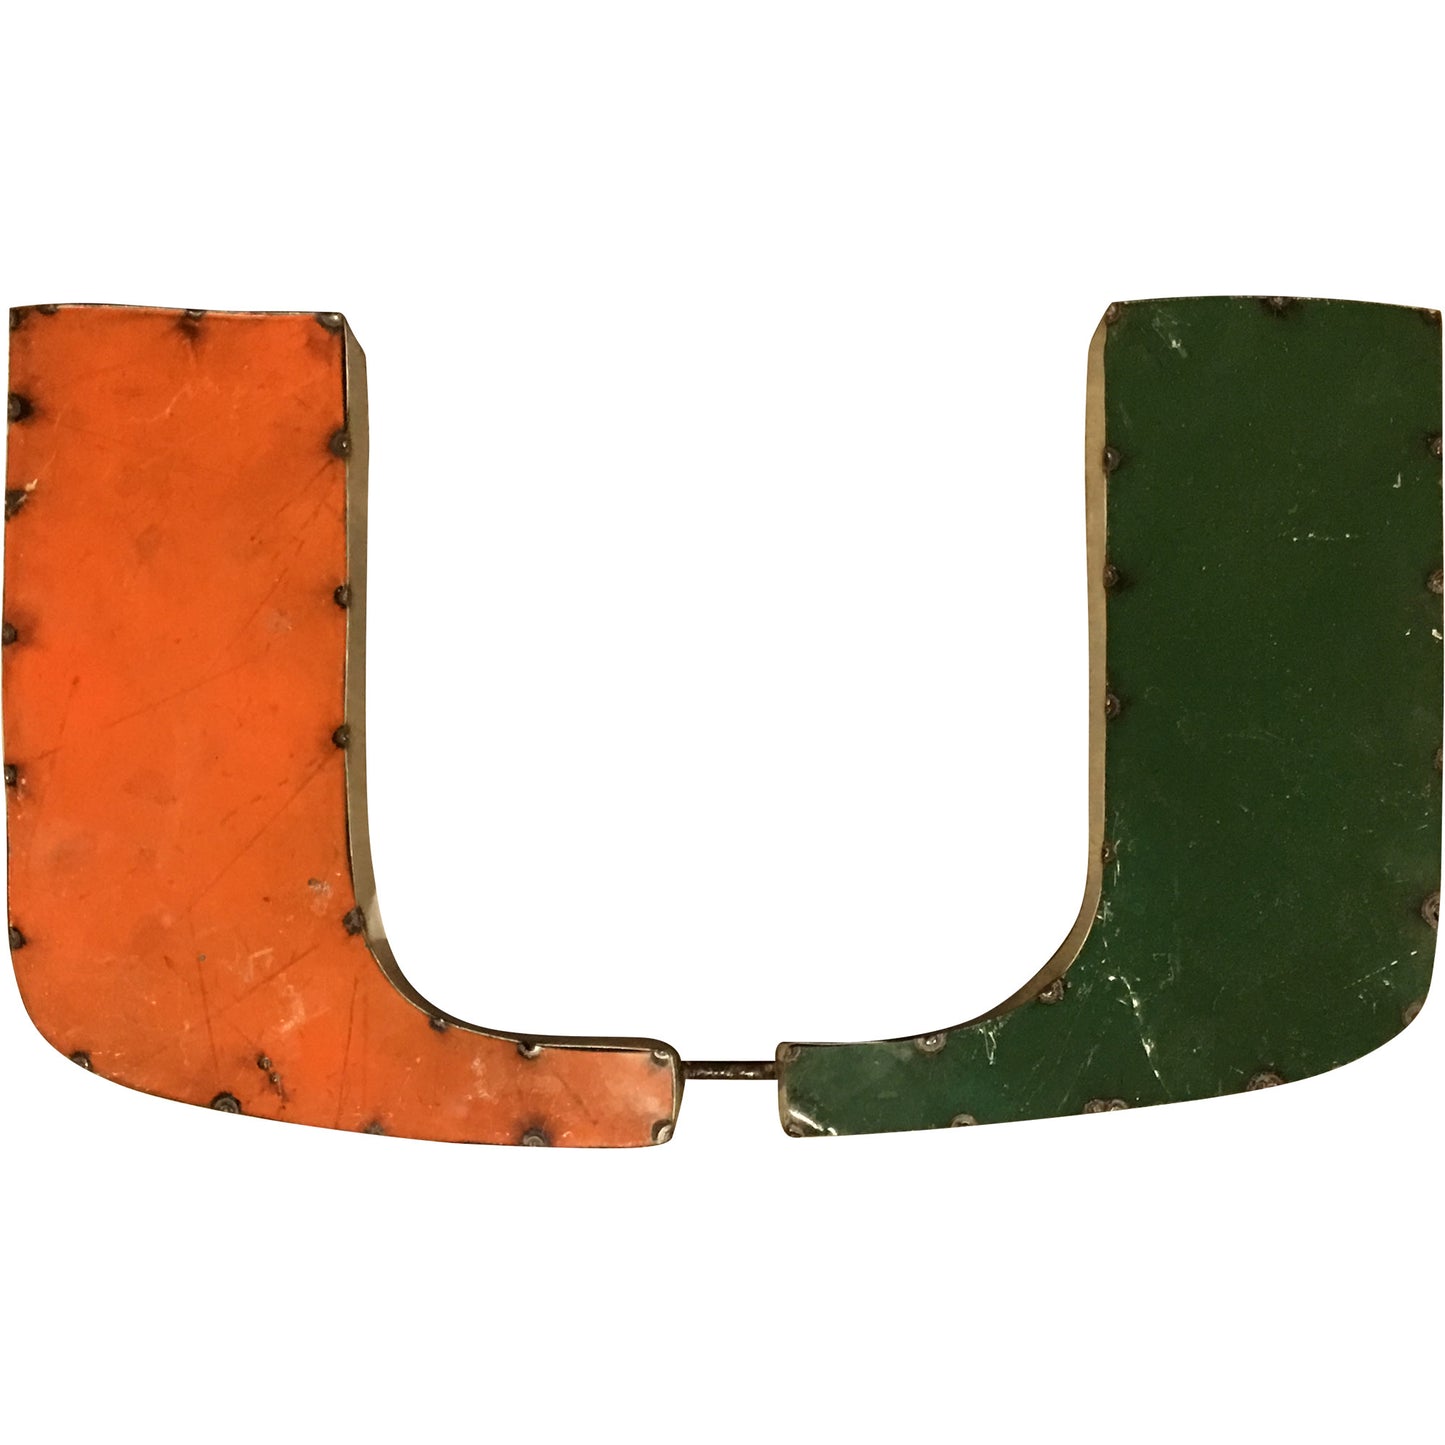 University of Miami "U" Logo Recycled Metal Wall Decor